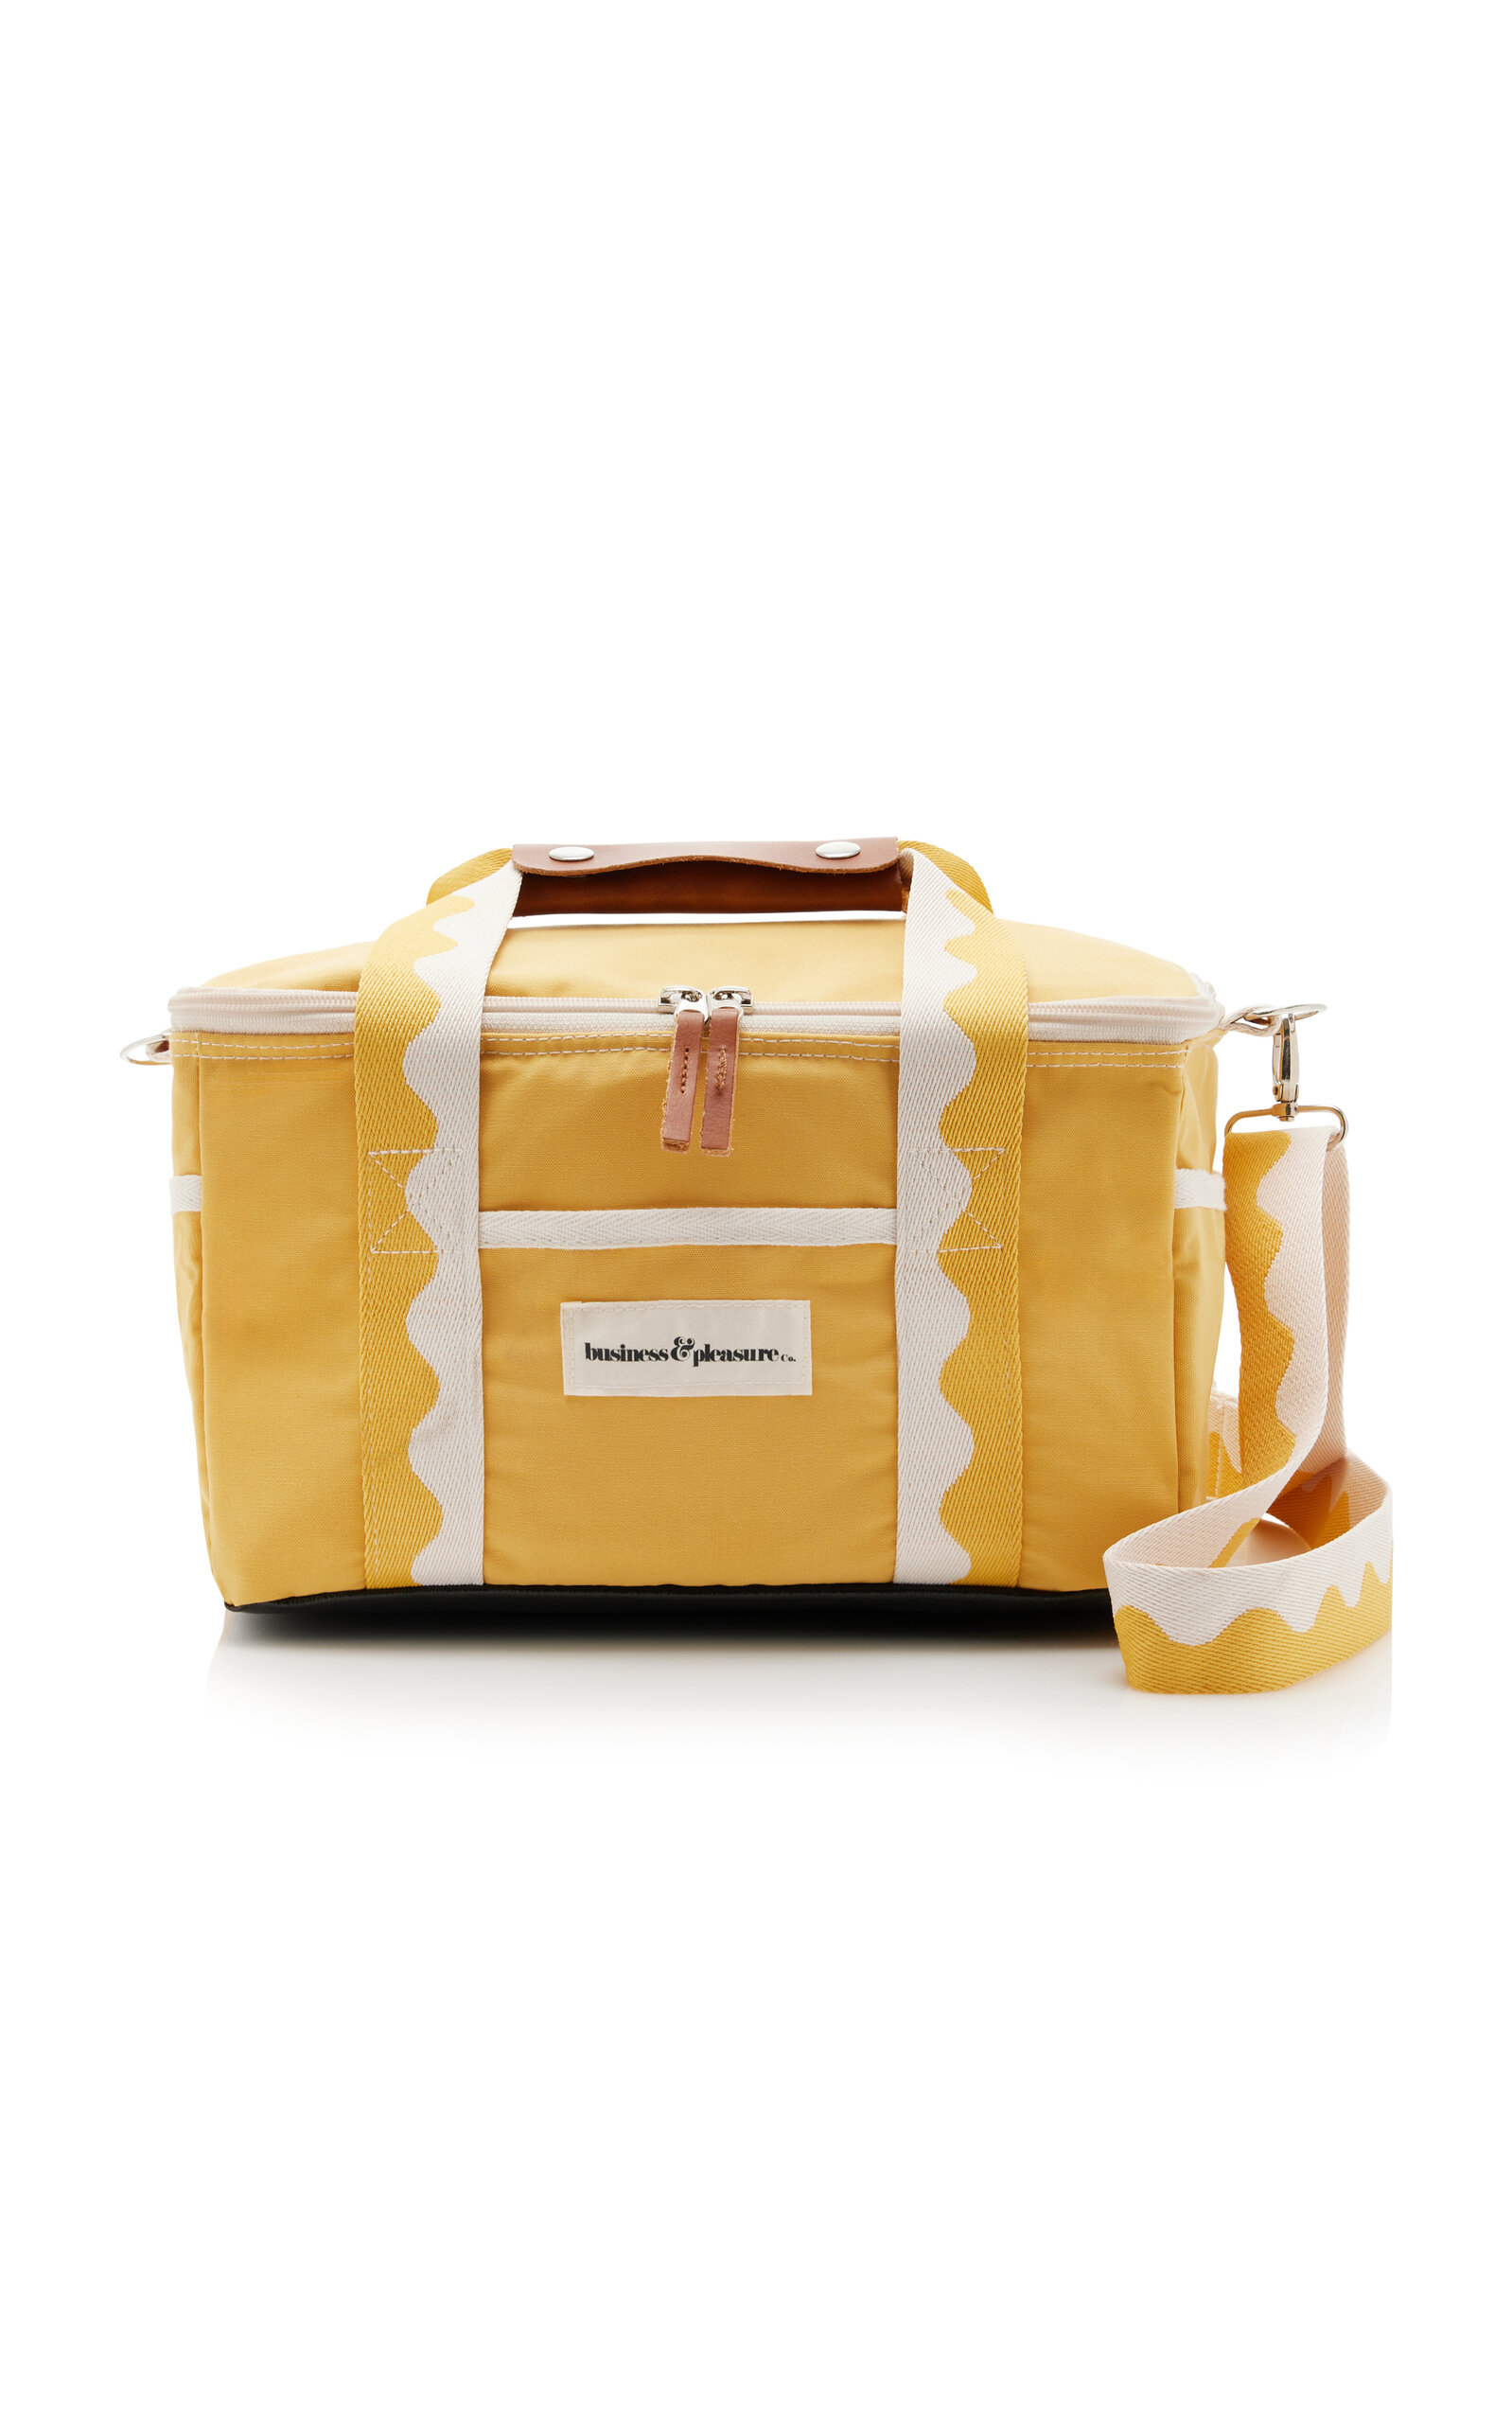 Business & Pleasure Exclusive The Premium Cooler Bag In Yellow